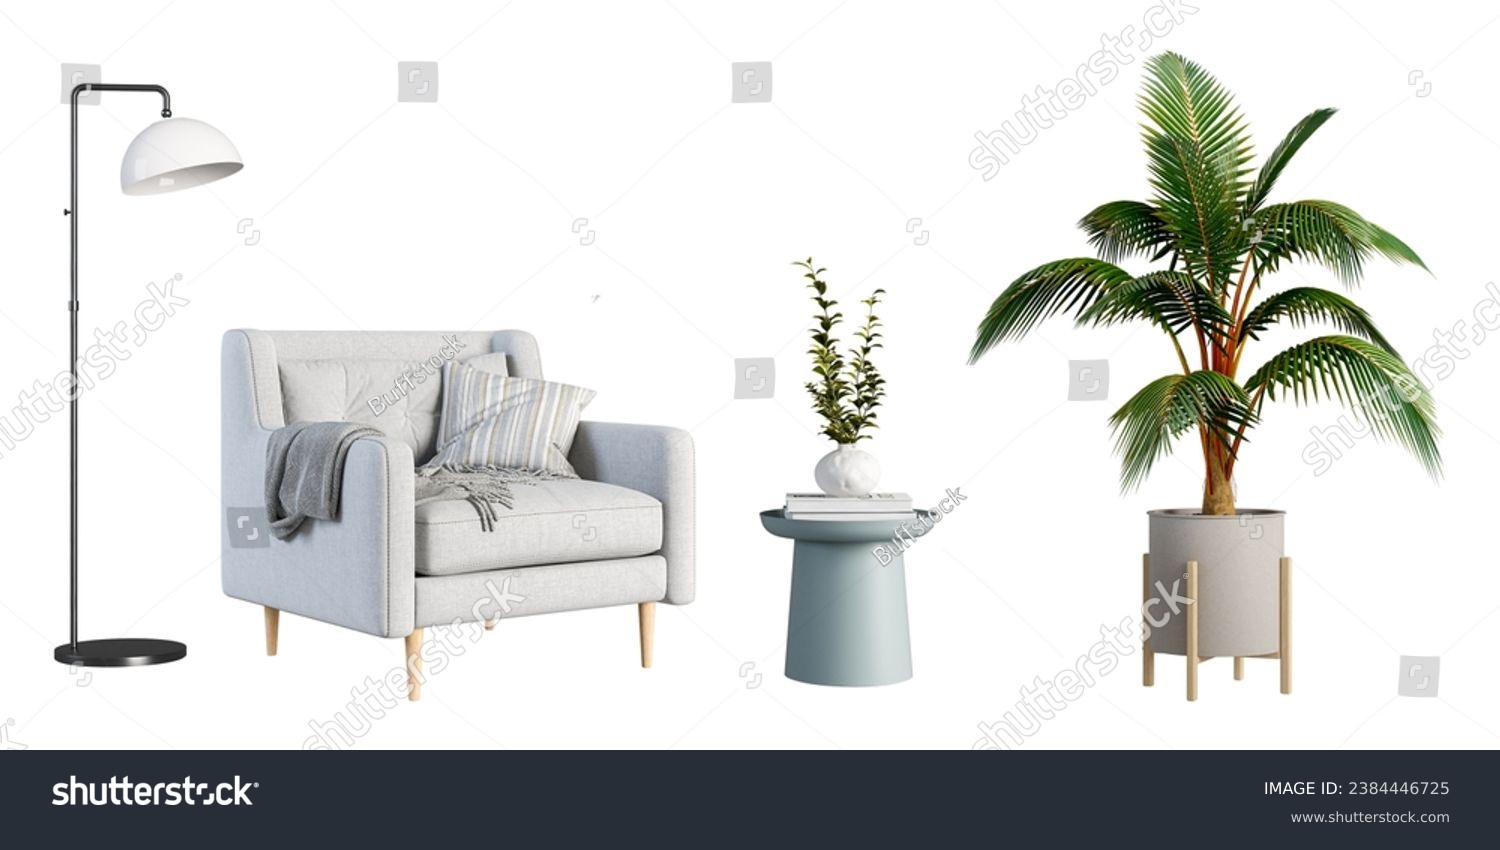 Modern interior furniture set in 3d rendering on white background #2384446725